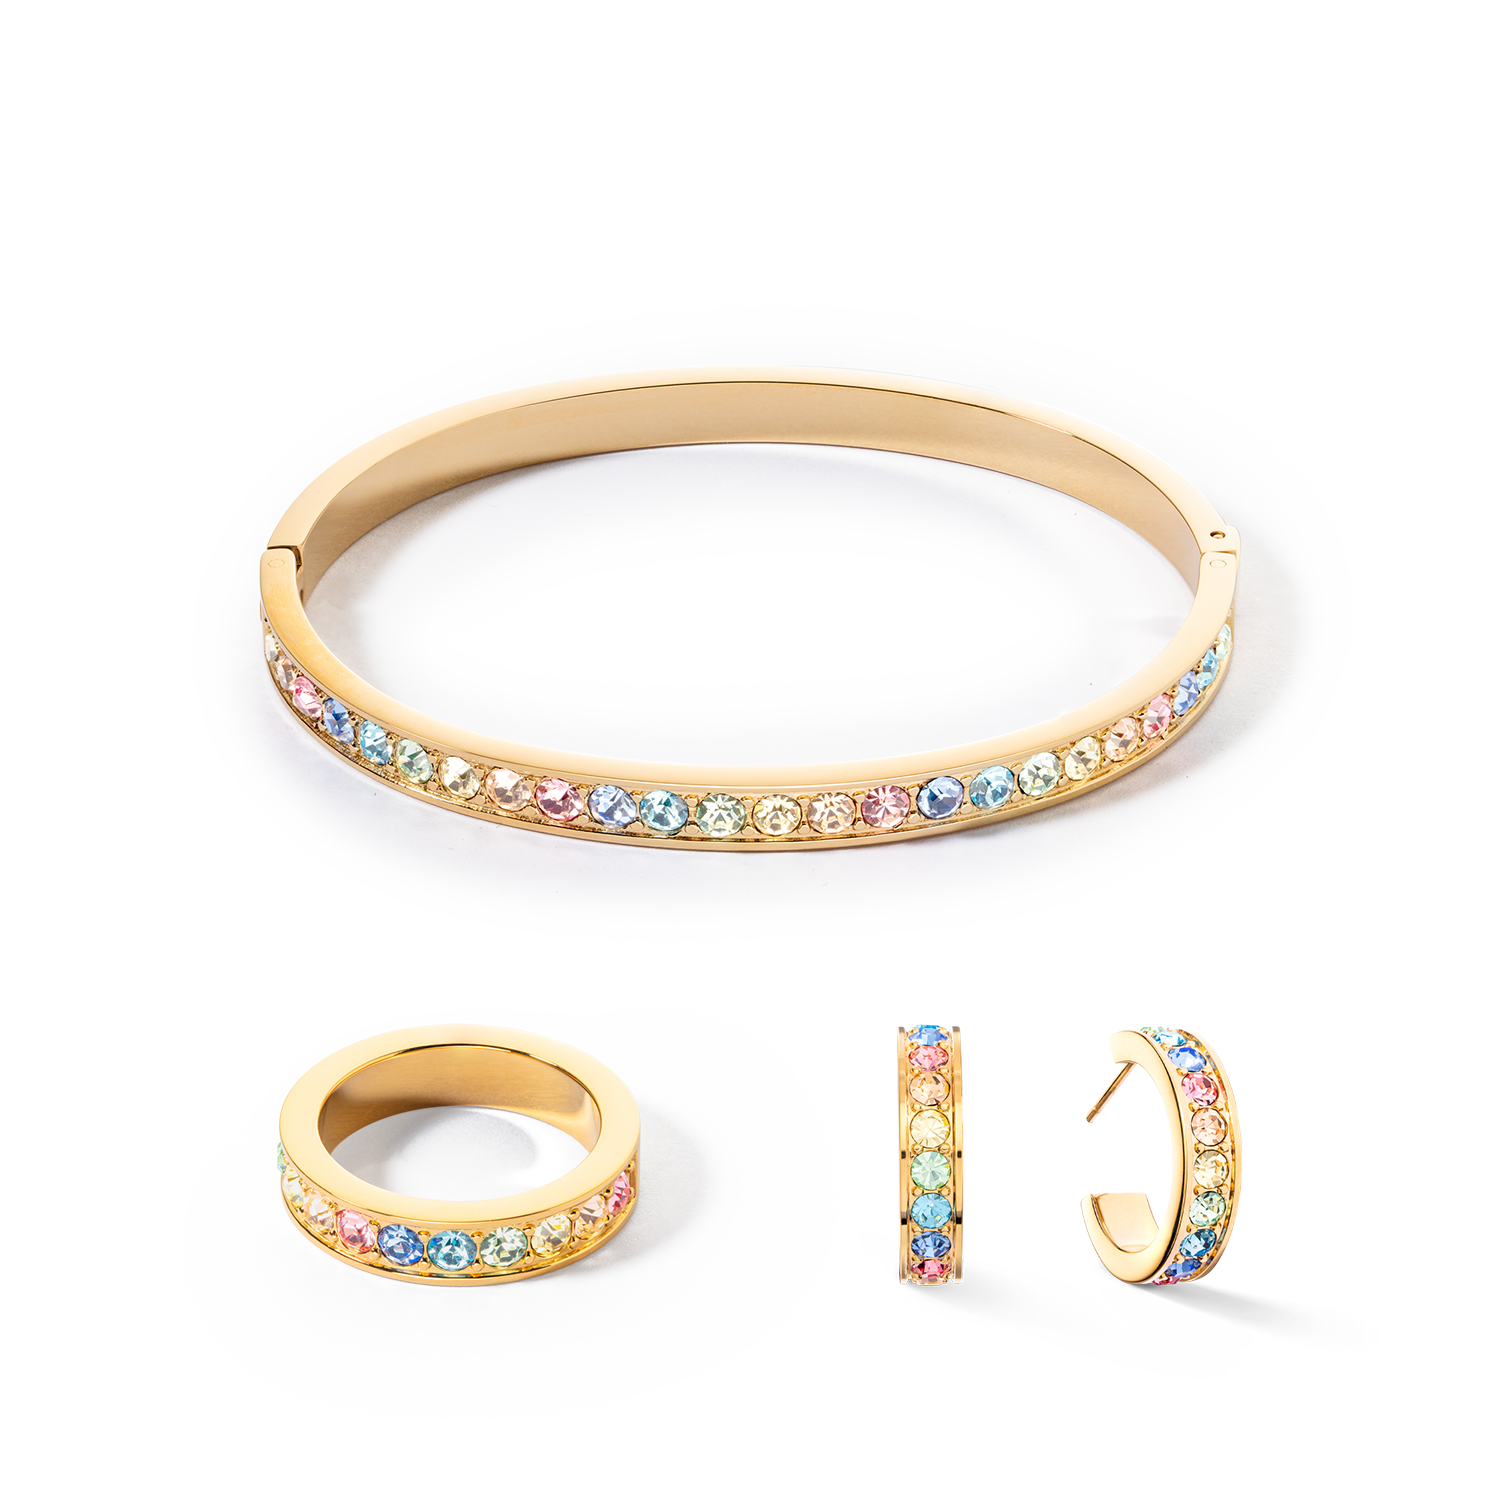 Bracelet stainless steel & crystals gold multi pastel 19